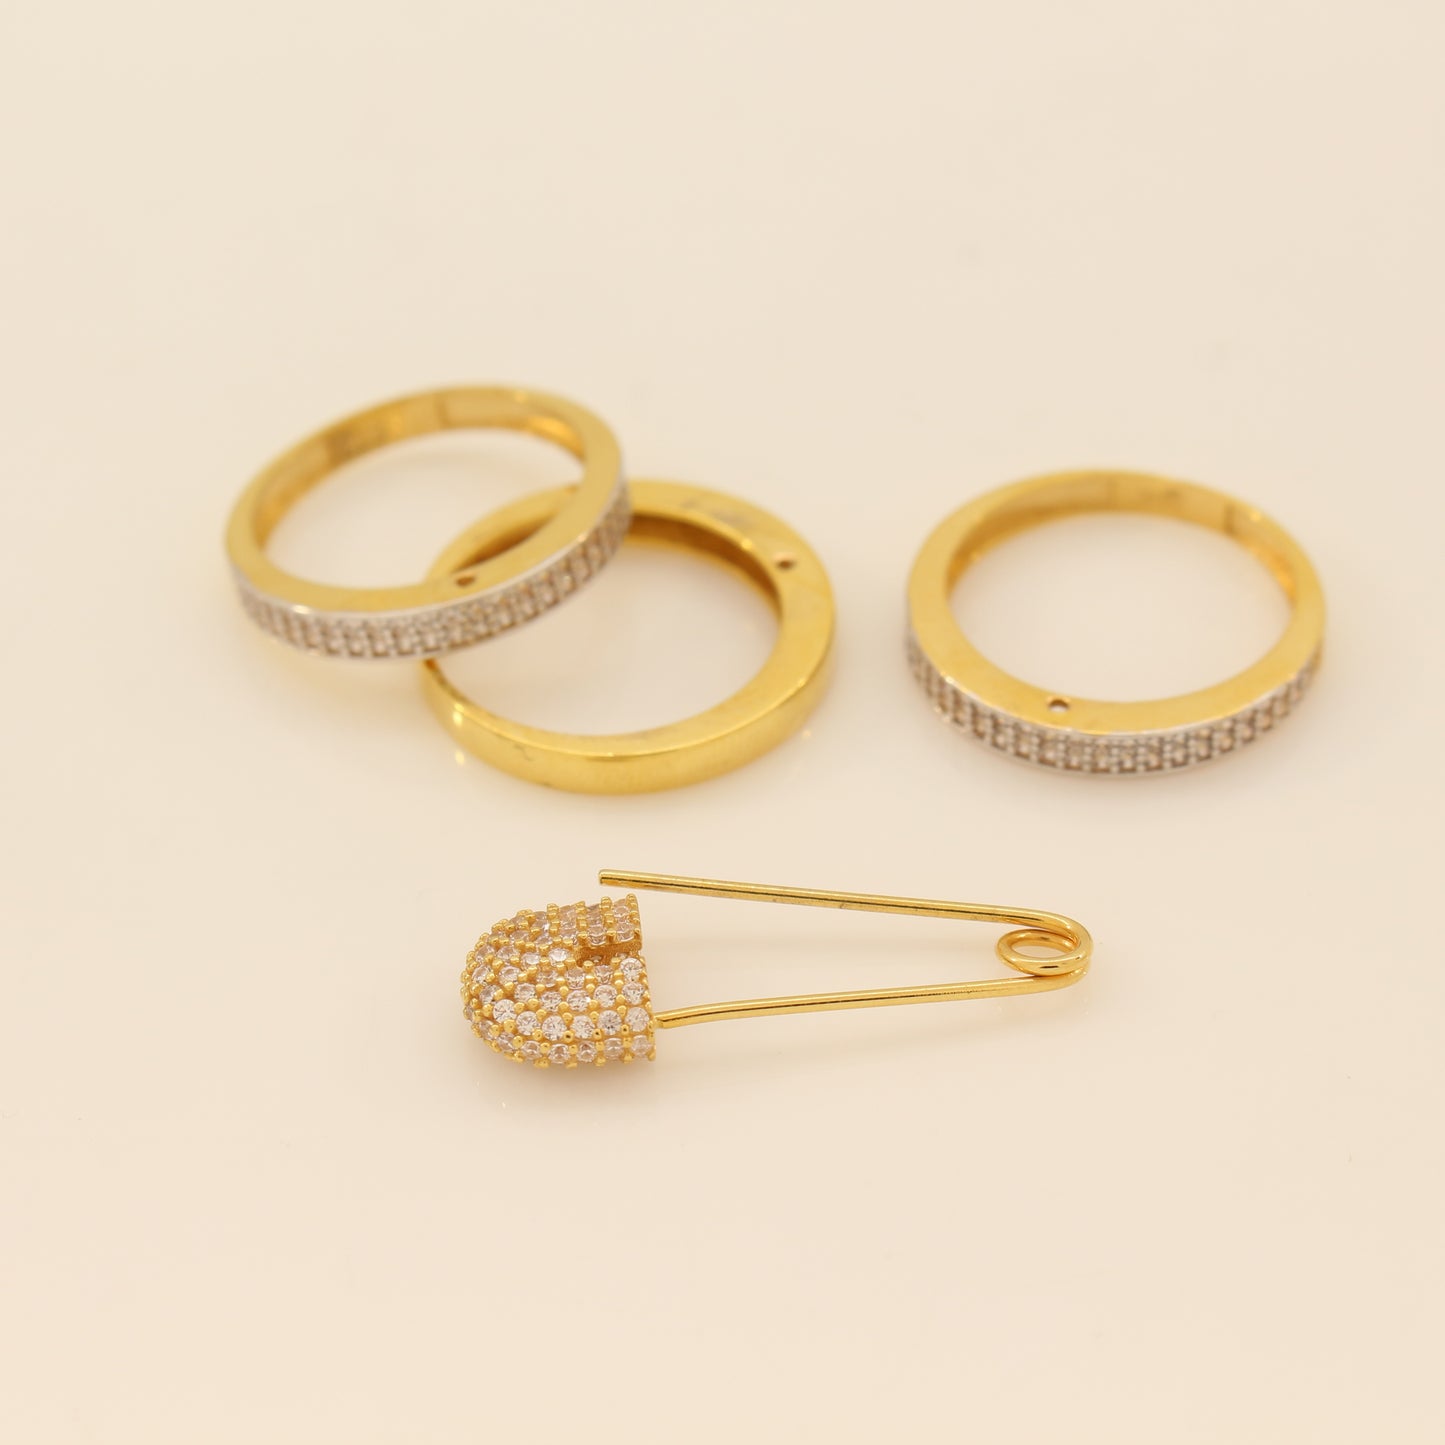 21K Gold Pin-Stacked Ring